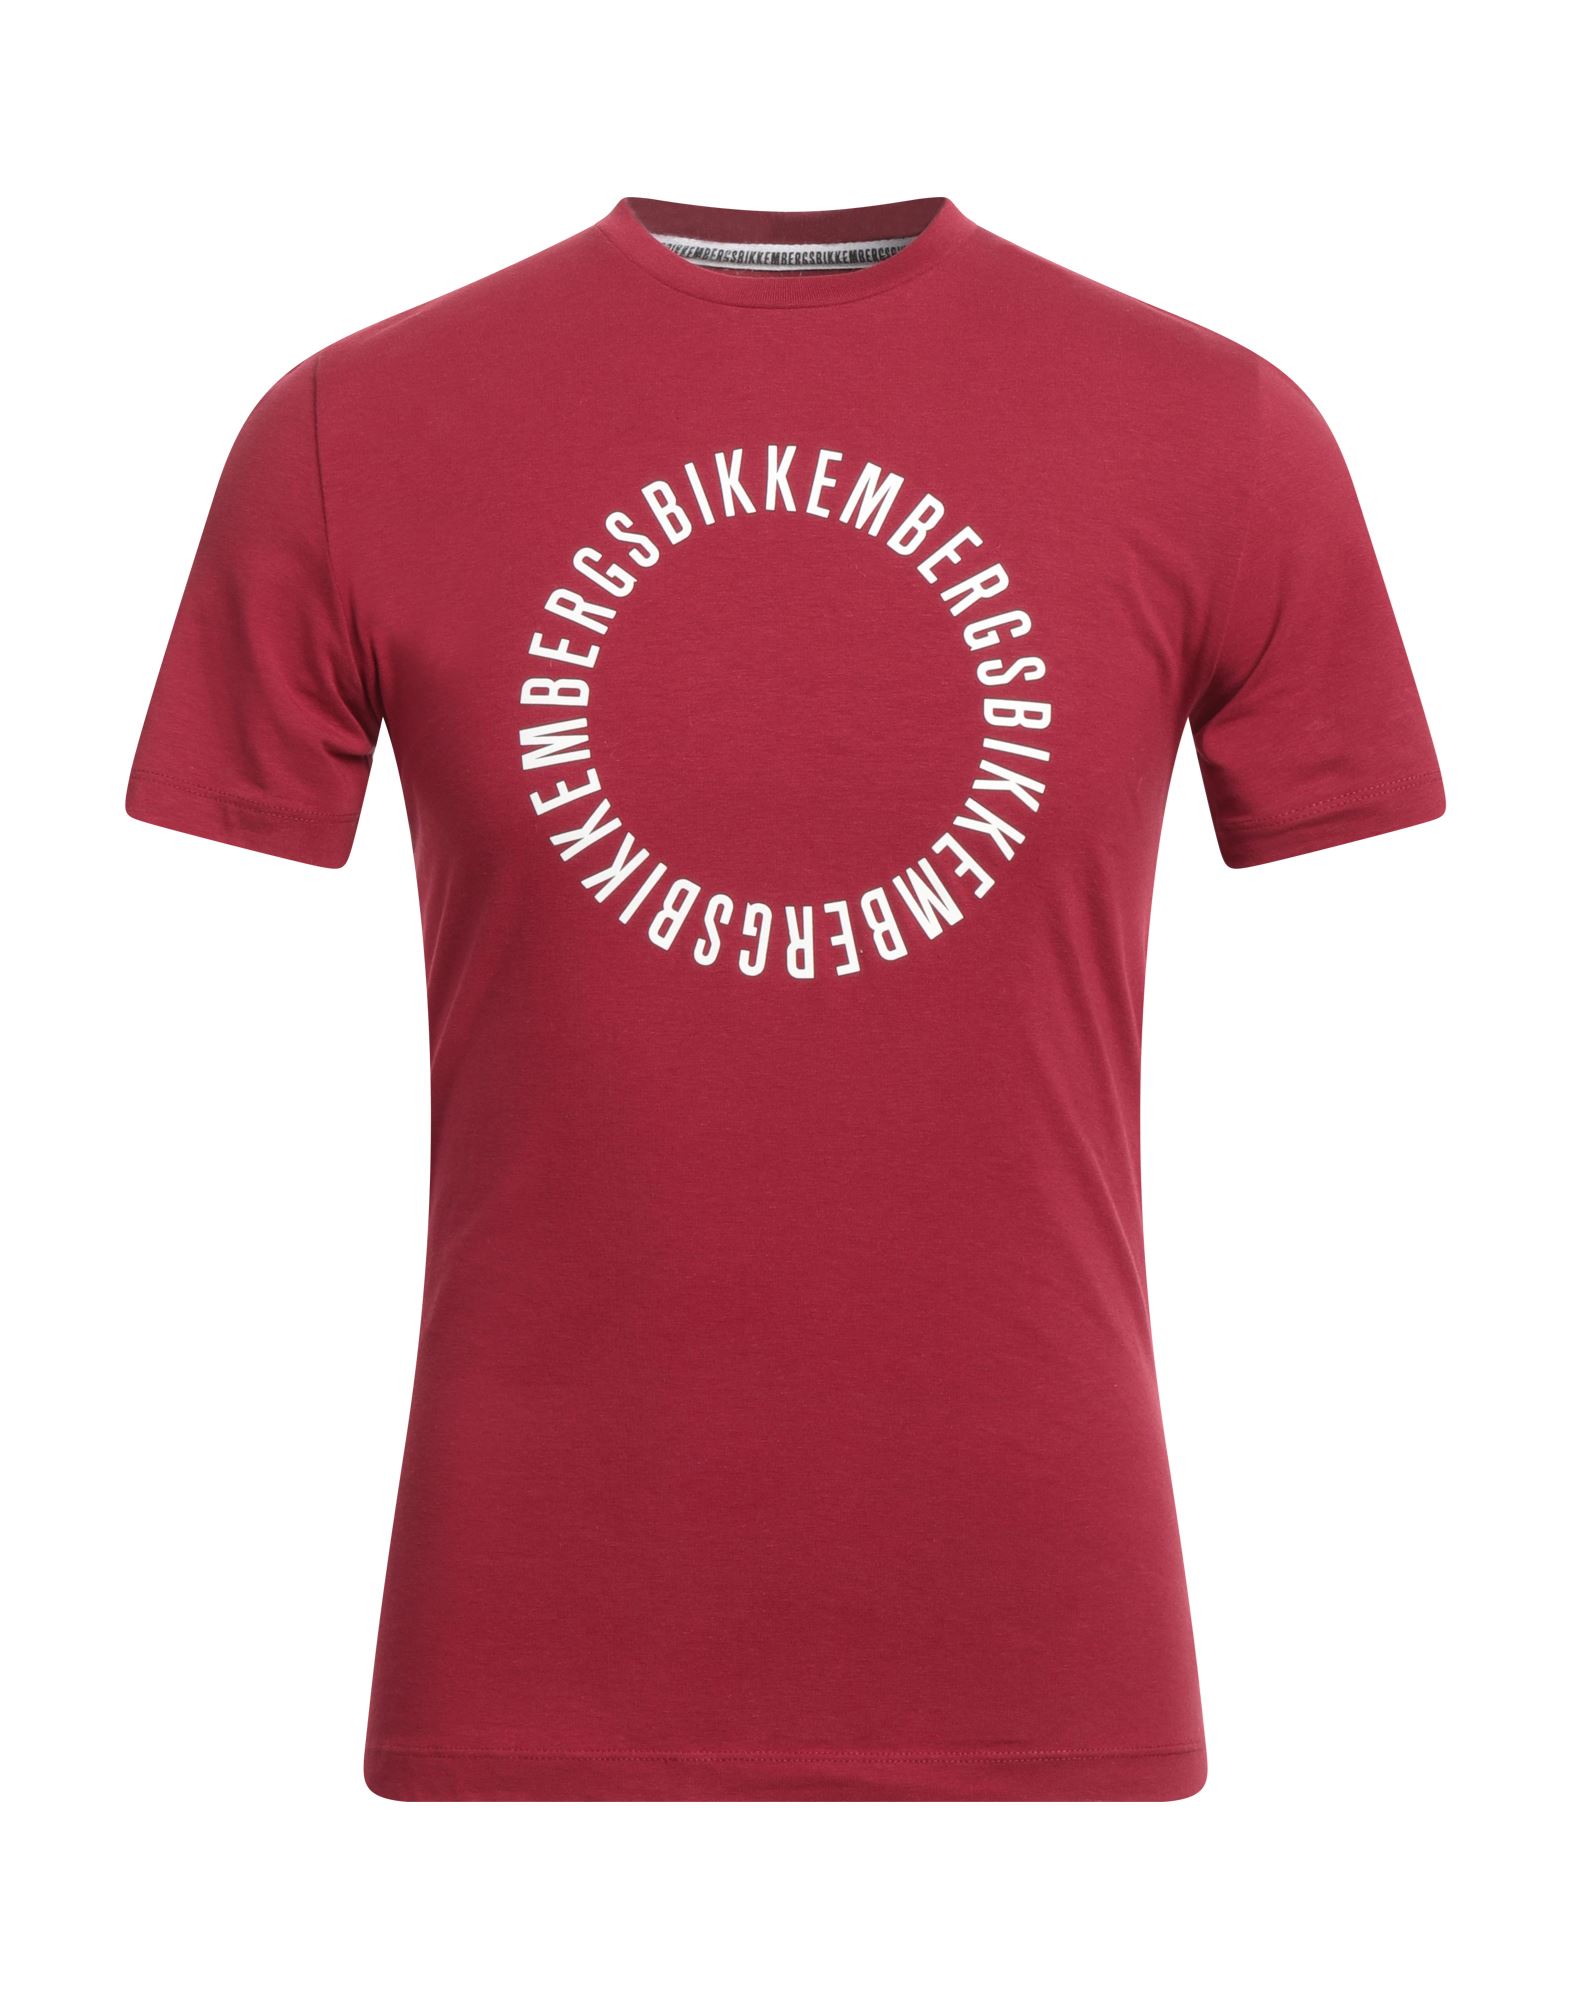 BIKKEMBERGS T-shirts Herren Bordeaux von BIKKEMBERGS